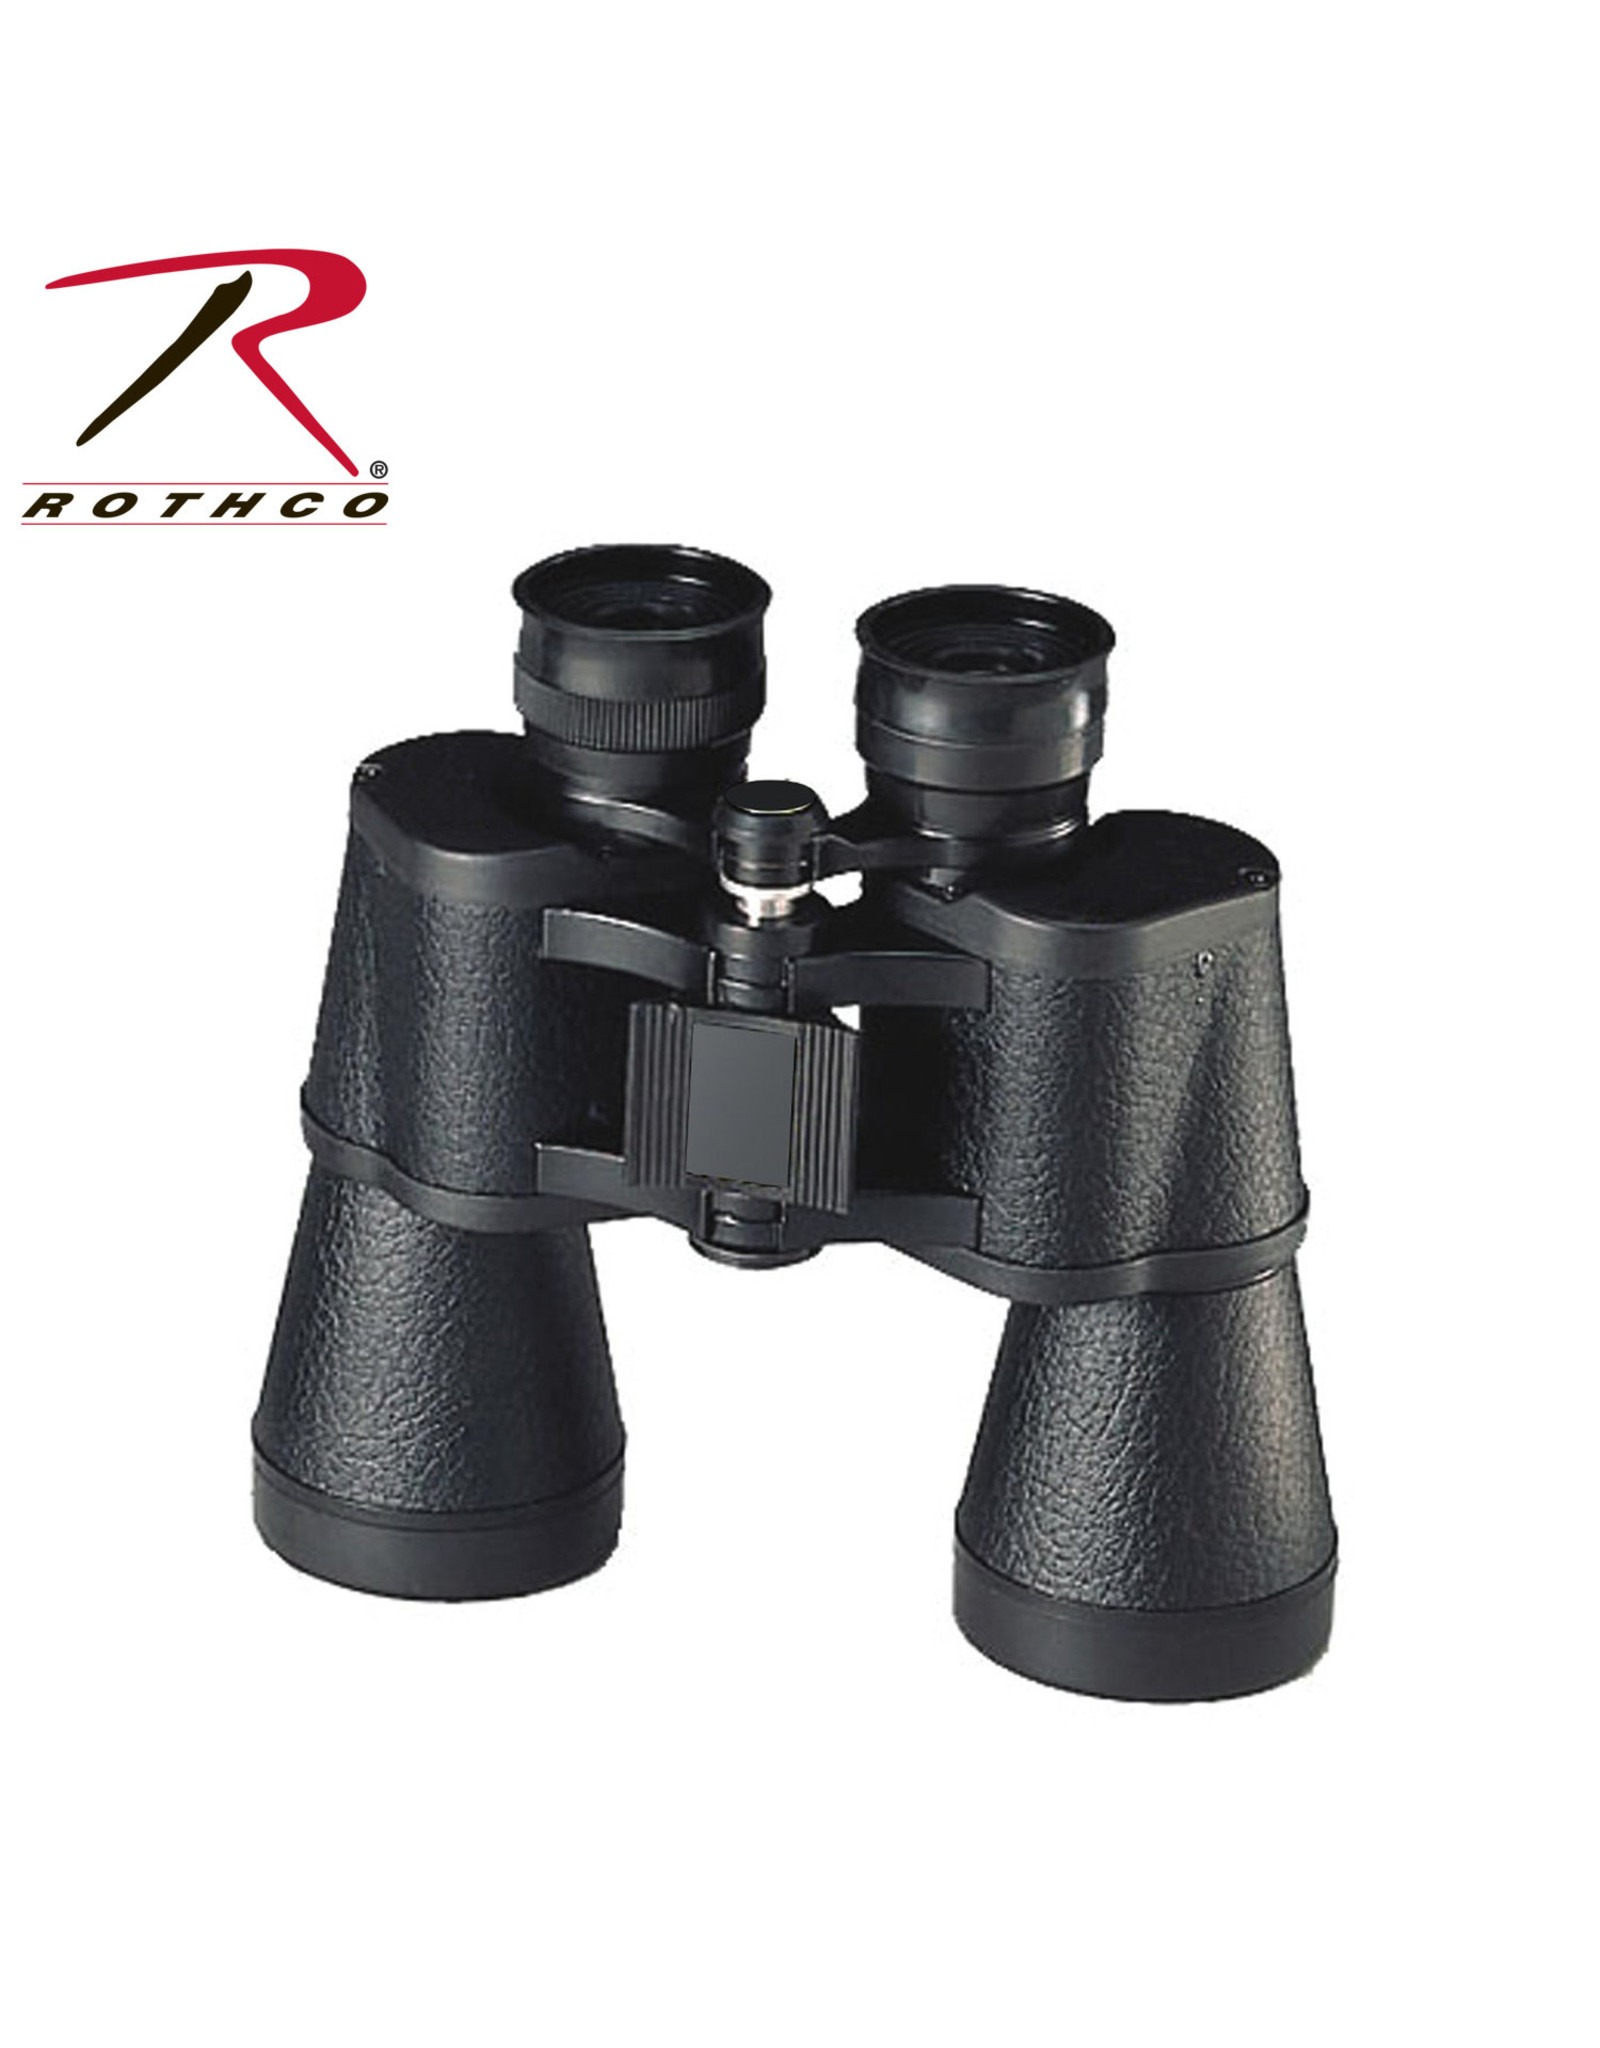 Rothco 10 X 50MM Binoculars - Black